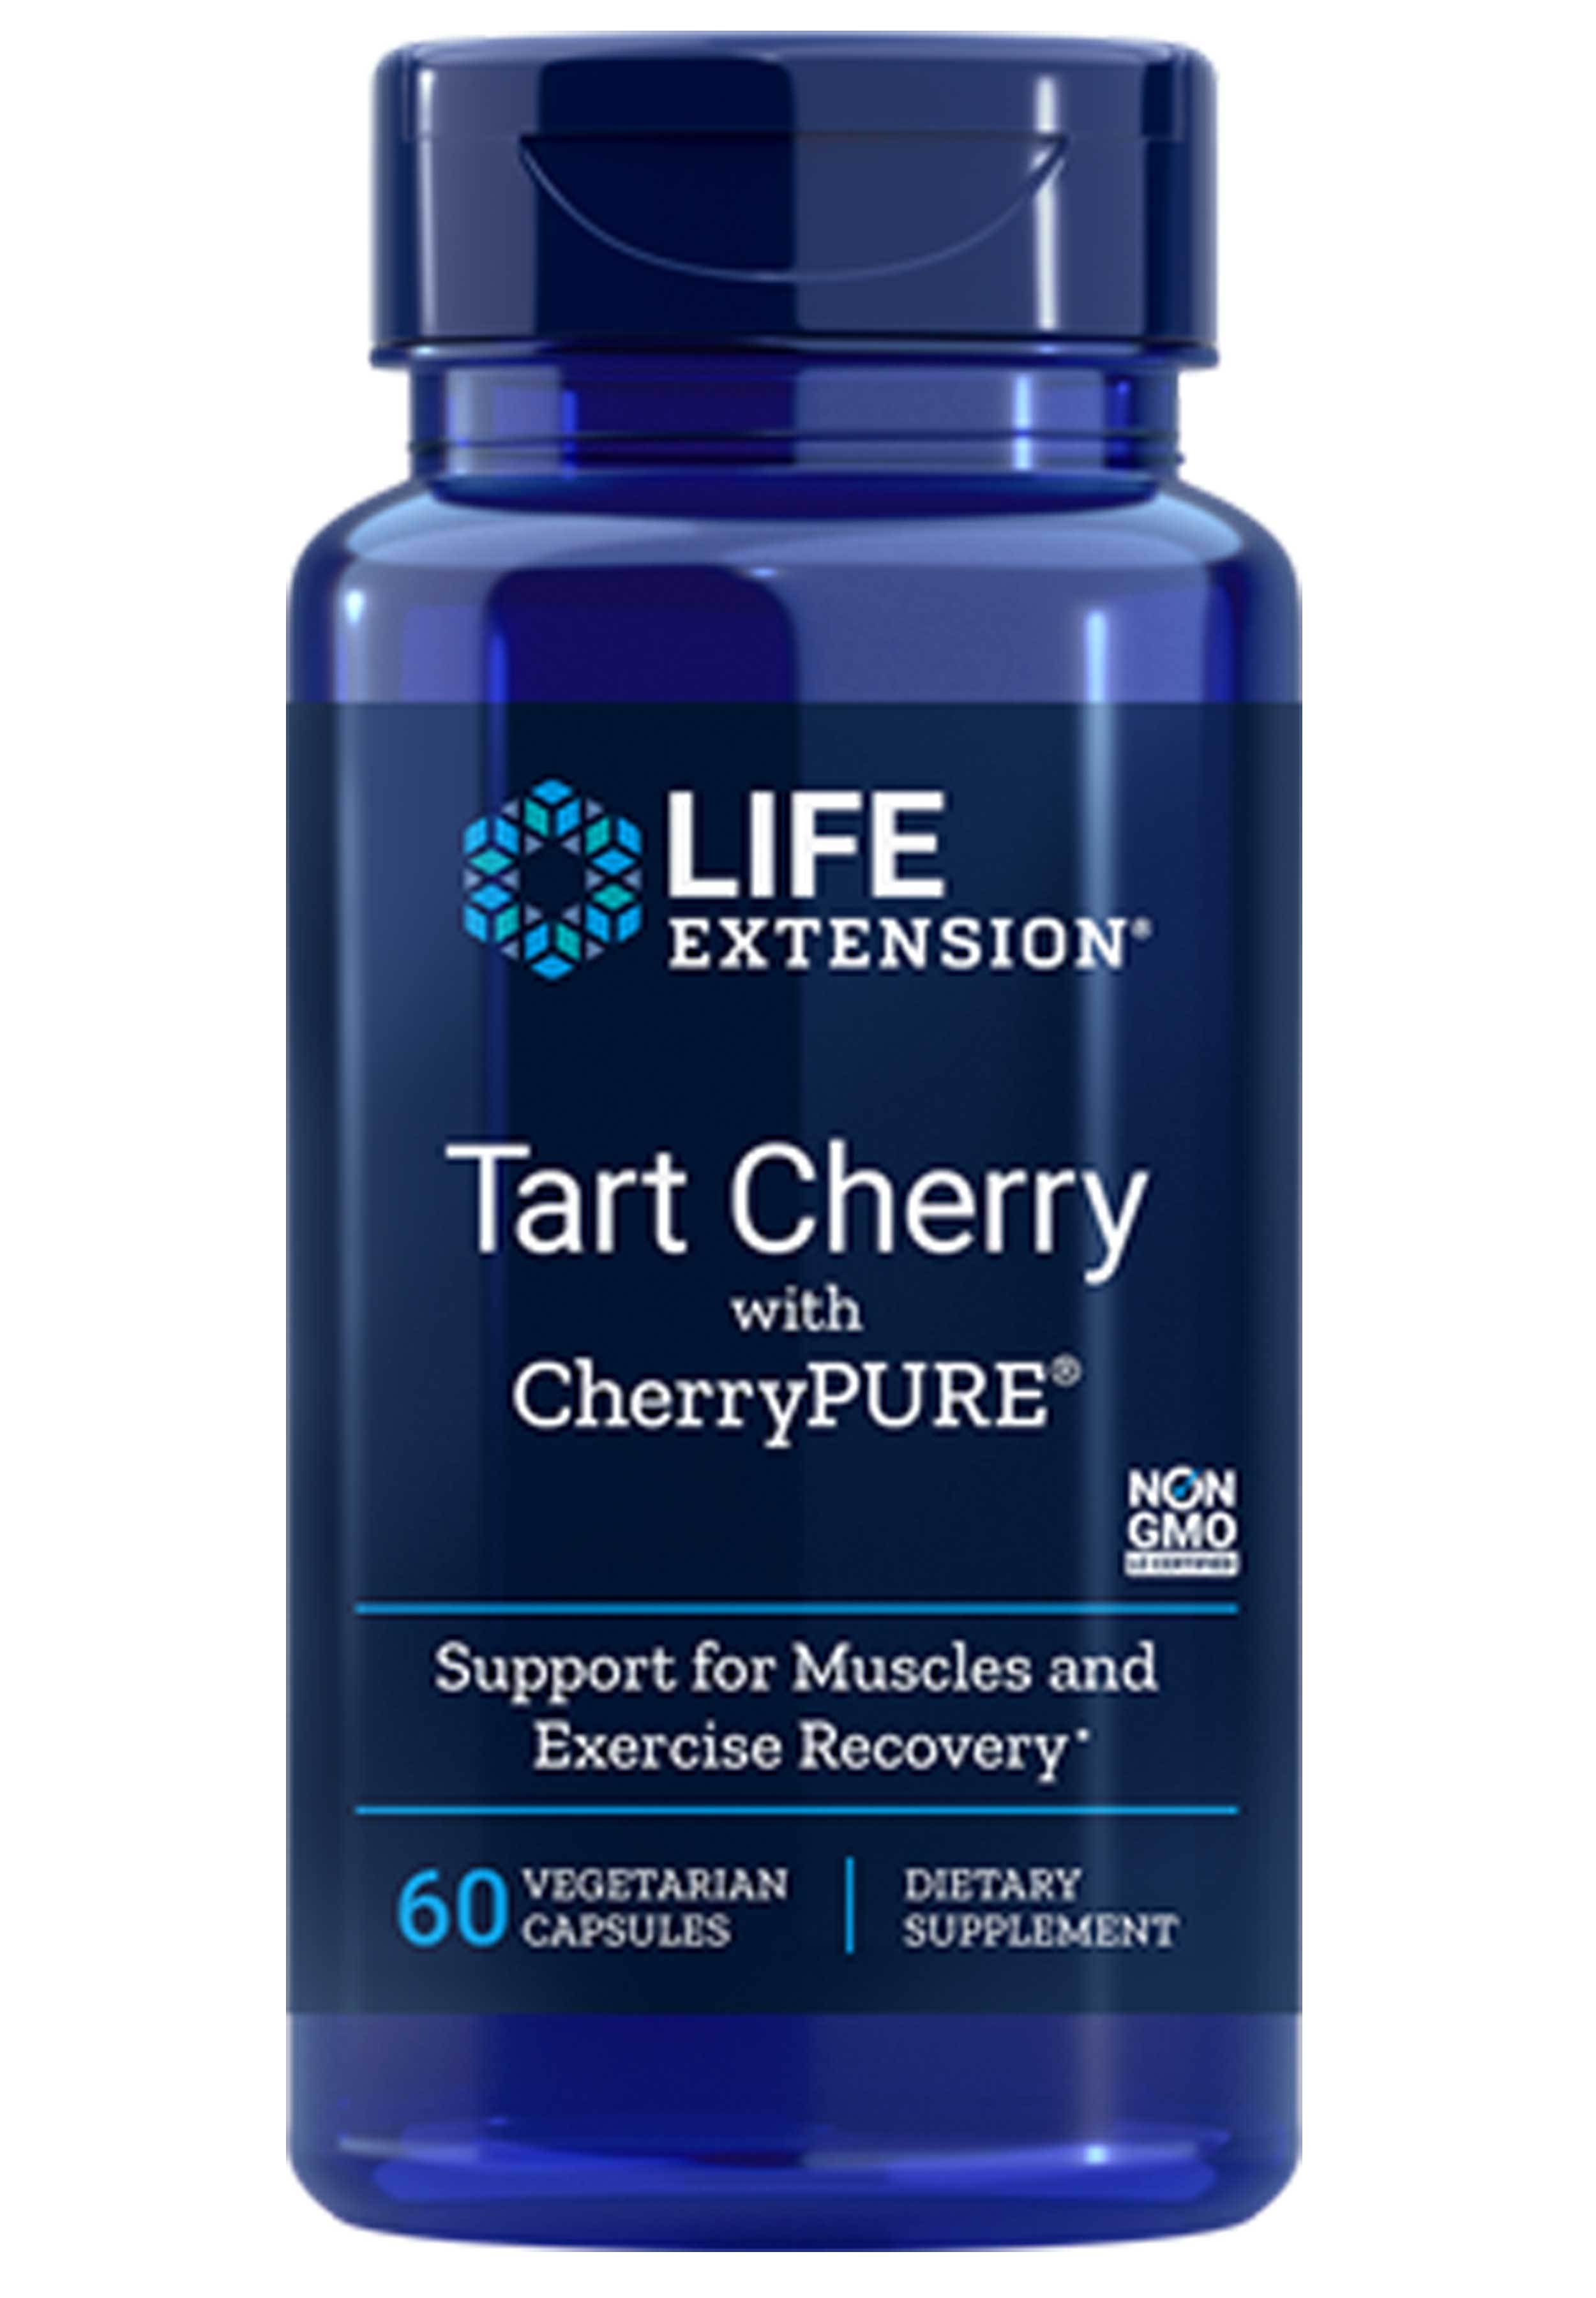 Life Extension Tart Cherry Extract